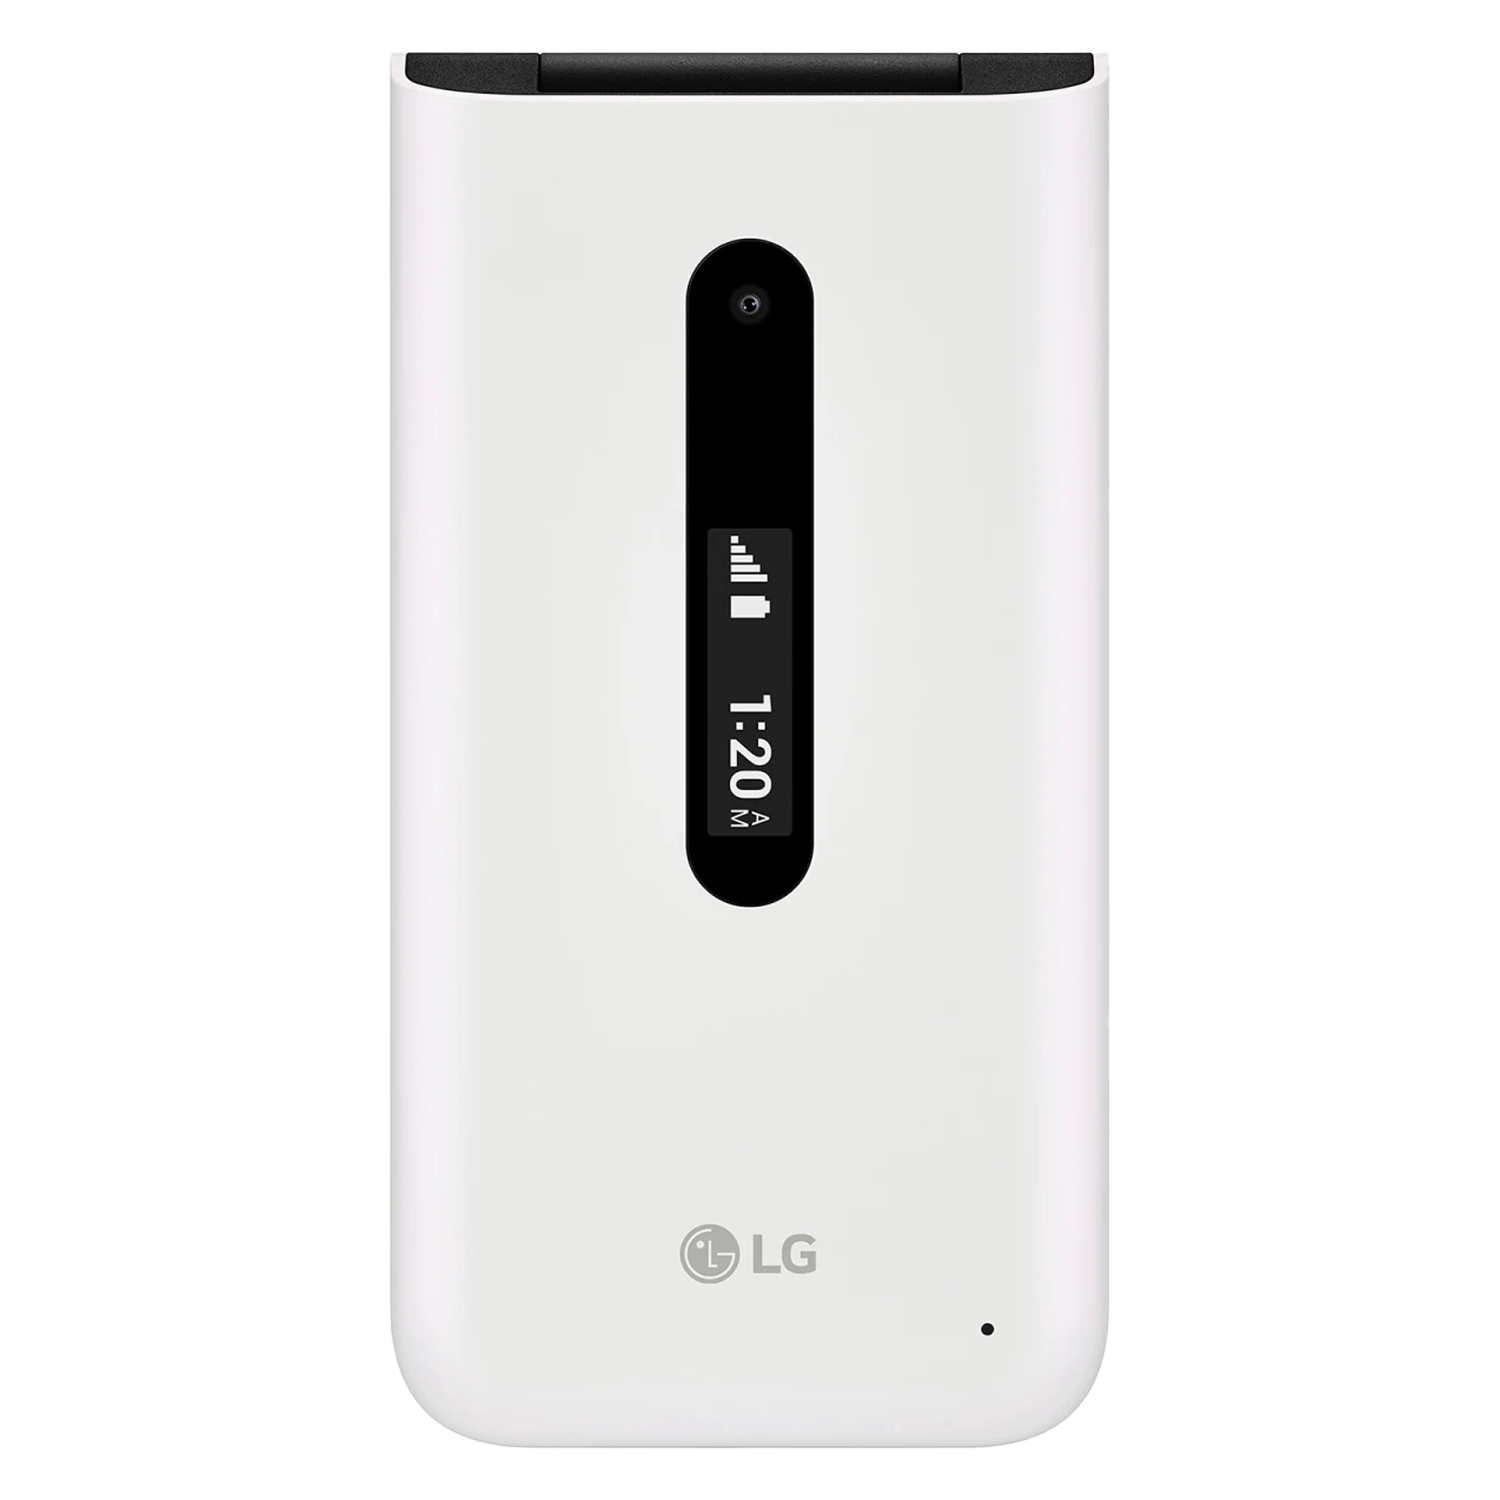 Celular LG Folder 2 LM-Y120S 8GB 1GB RAM Tela 2.8" - Branco Preto (Réplica)